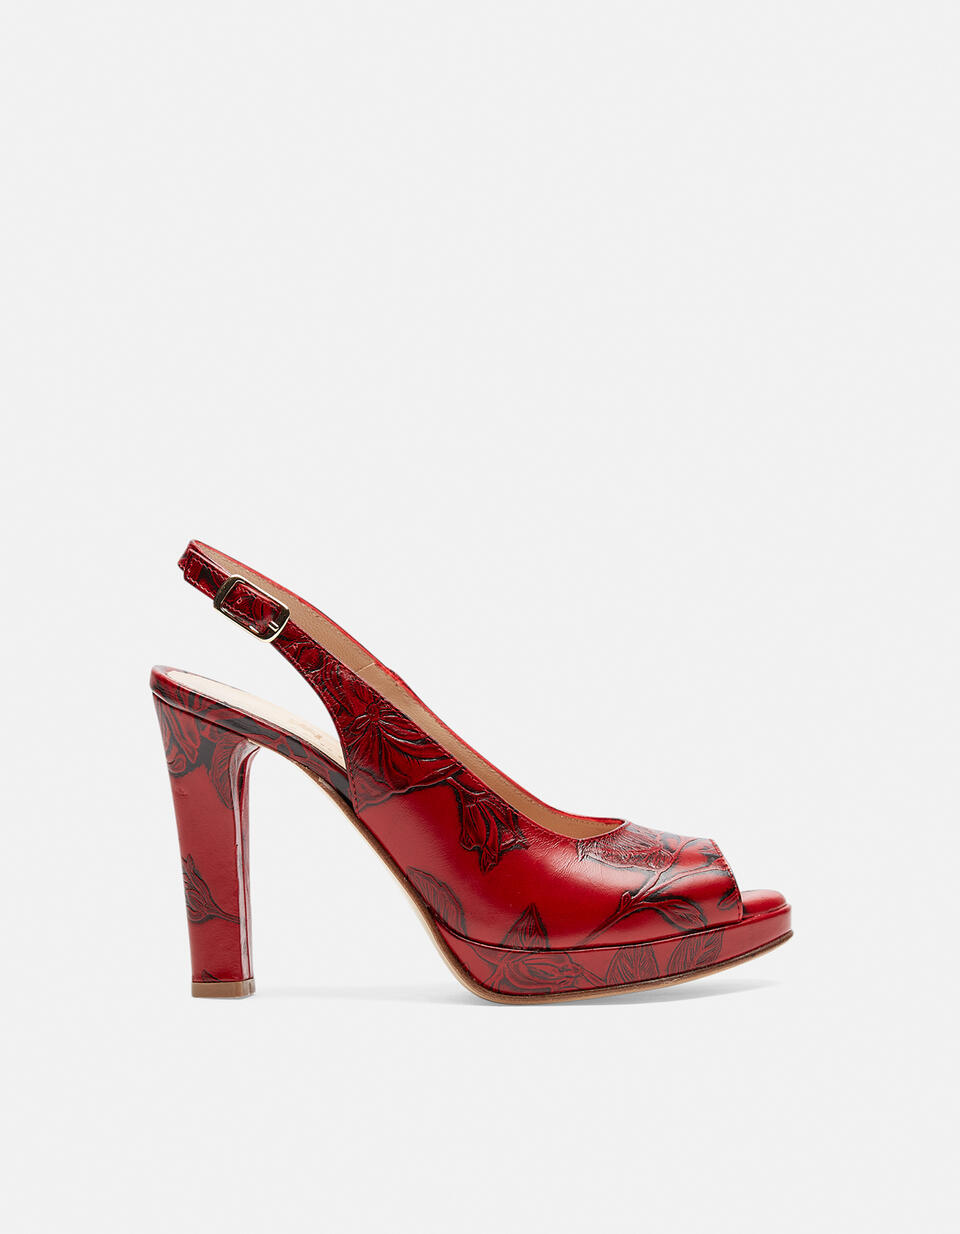 Monroe Mimi sandal - Women Shoes | Shoes ROSSO - Women Shoes | ShoesCuoieria Fiorentina